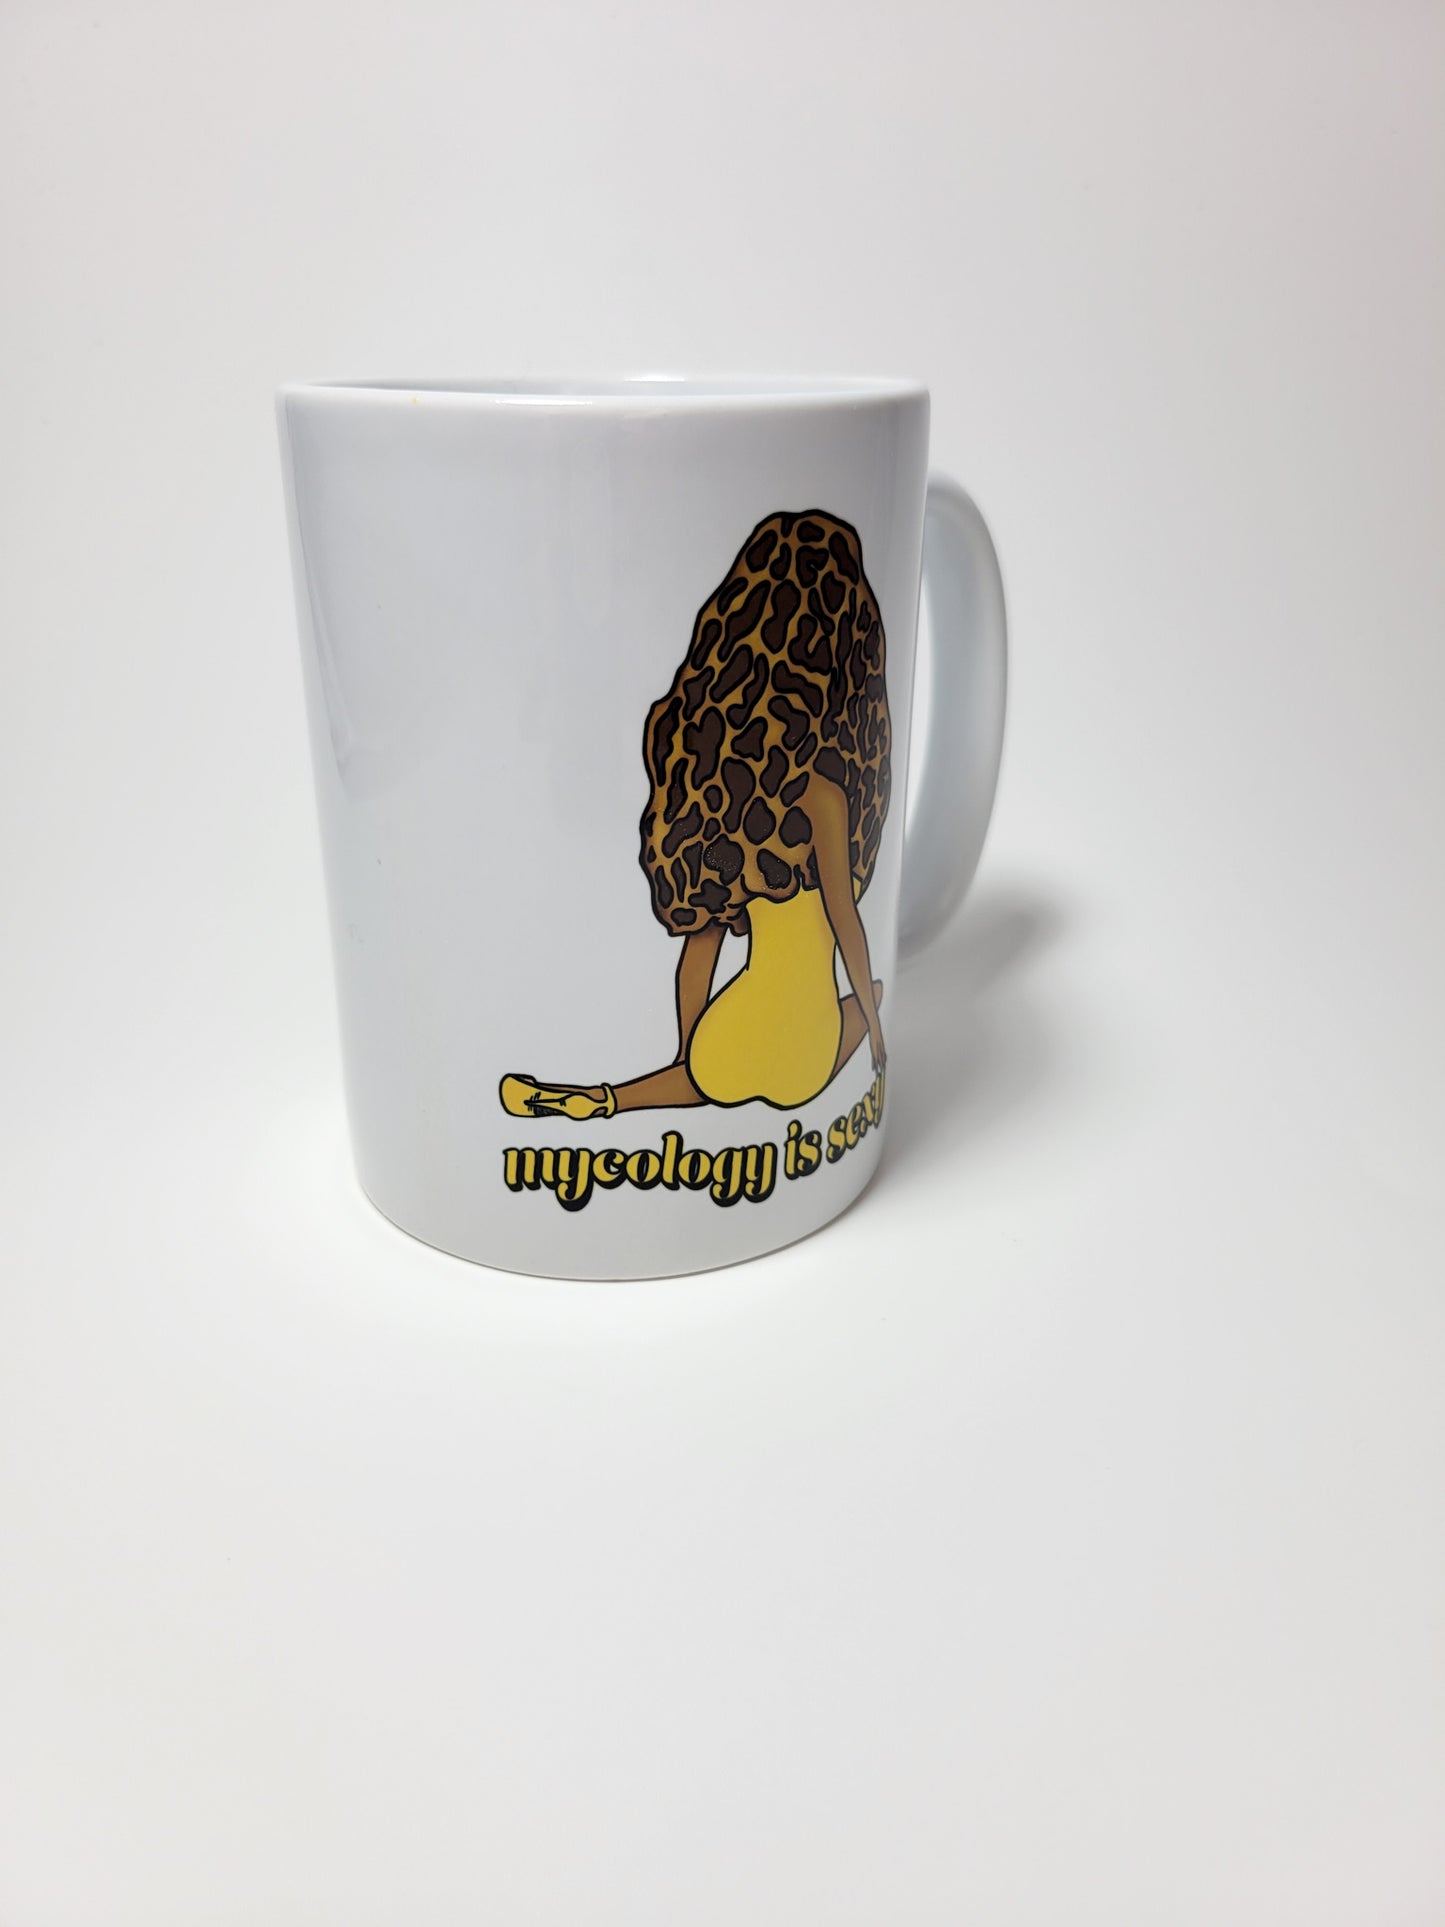 Madam Morel Coffee Mug | Mycology Is Sexy | Mushroom Pinup Girl Artwork | Unique Mushroom Design on Ceramic Cup | 11oz/15oz Sizes